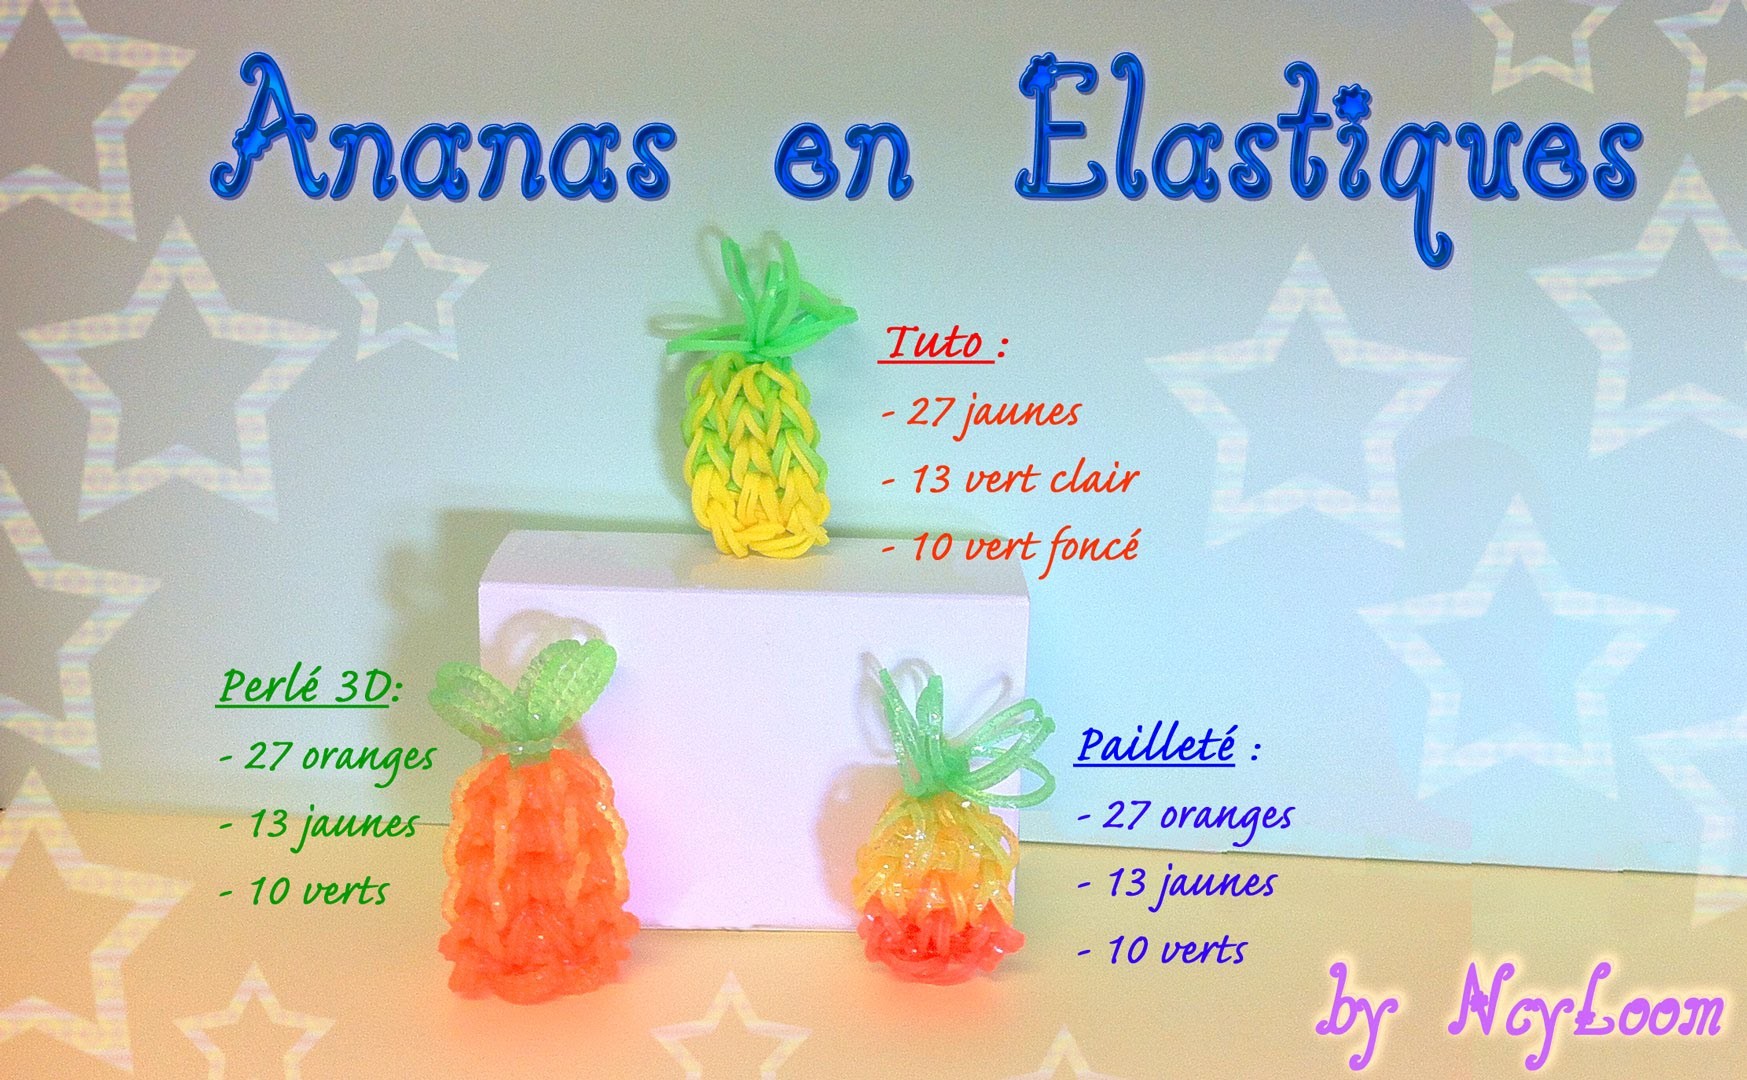 TUTO Ananas en élastiques Rainbow Loom Français